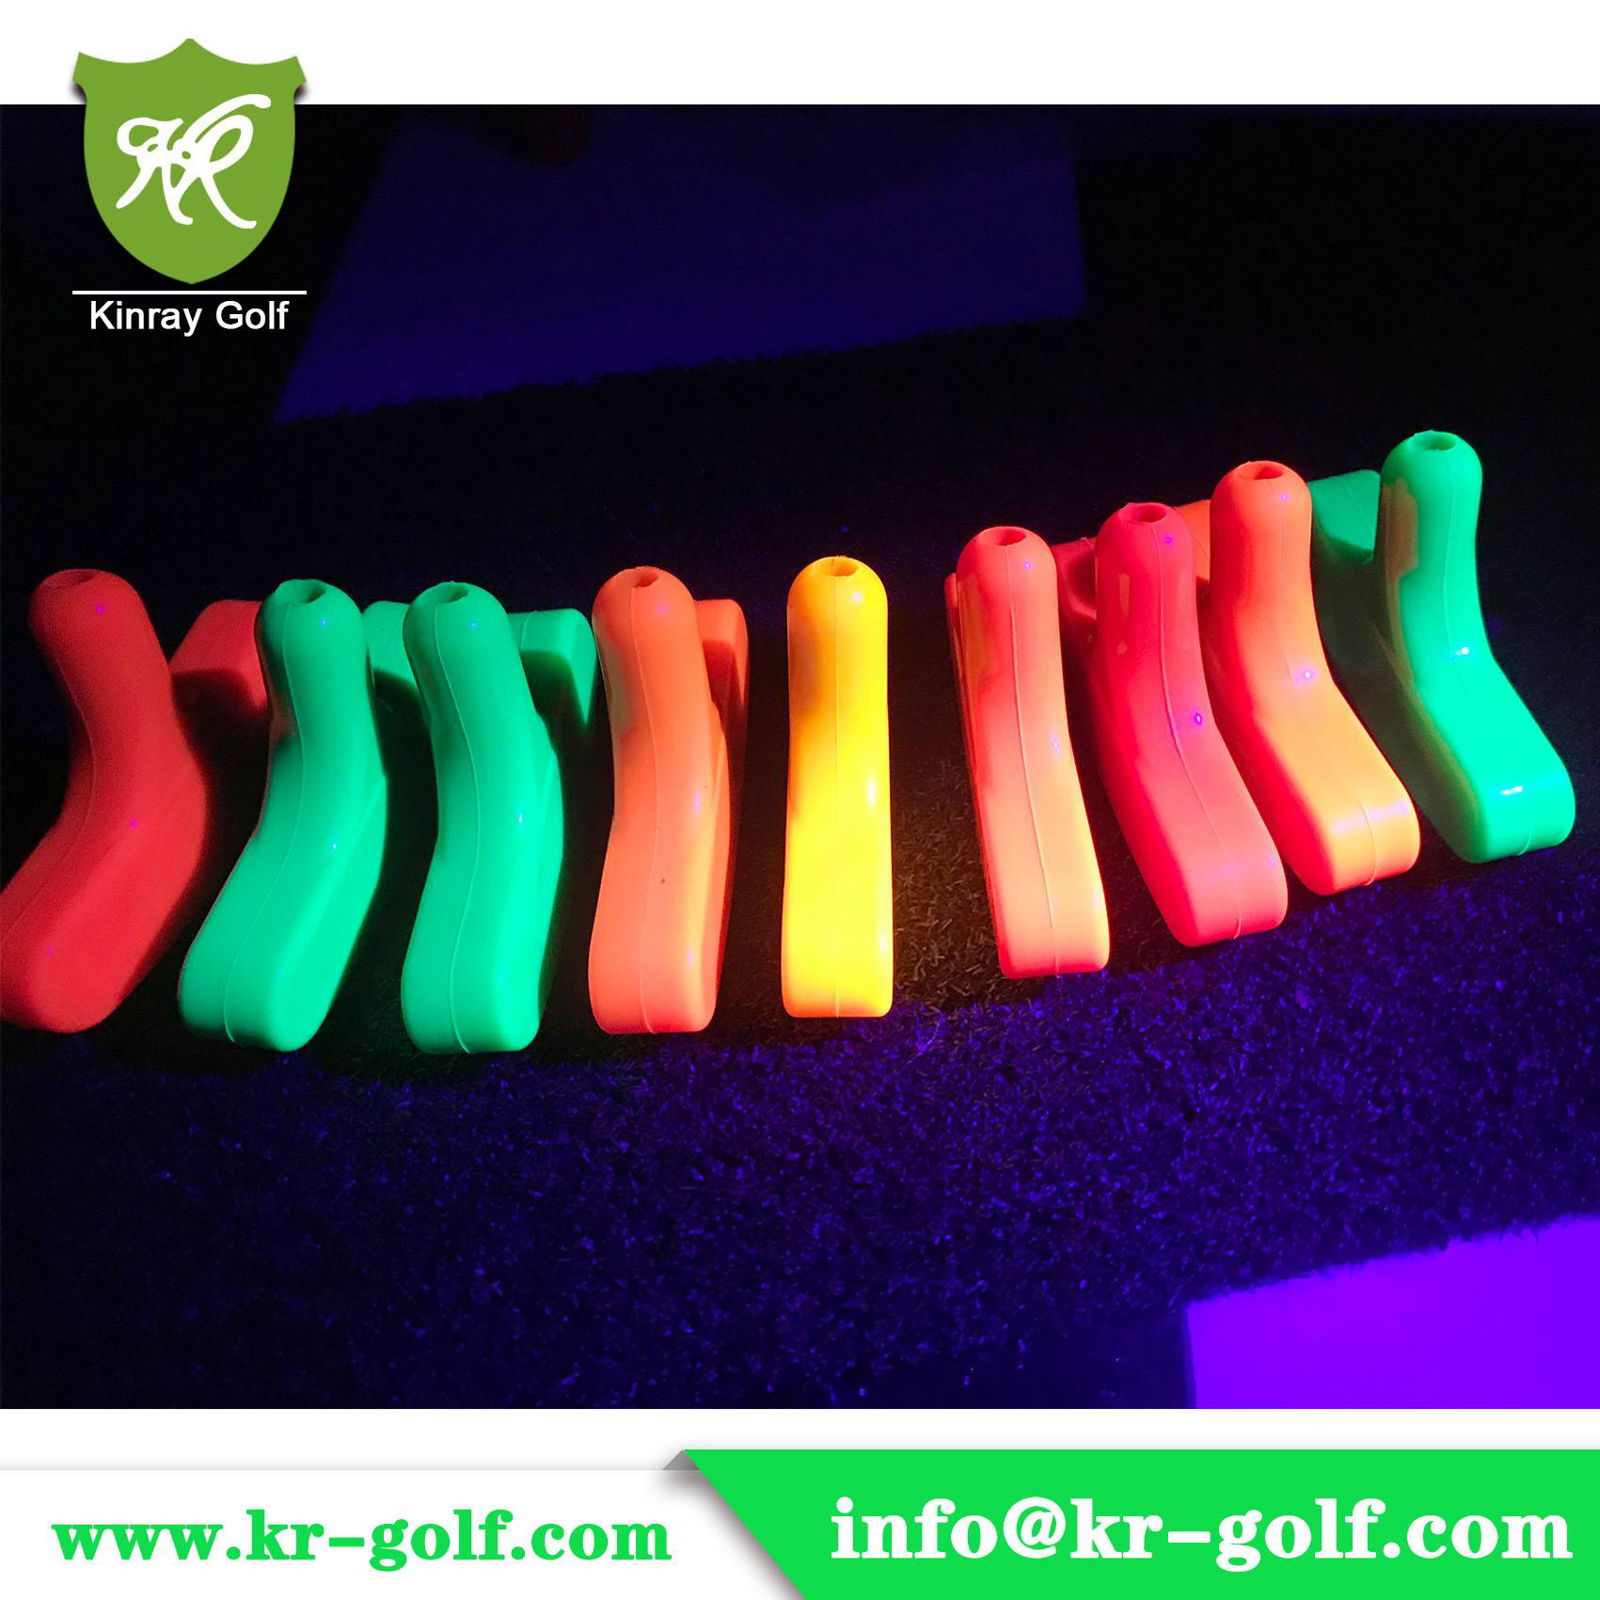 UV-Glowing Mini Golf rubber putters ,Blacklight Miniature golf putter  3